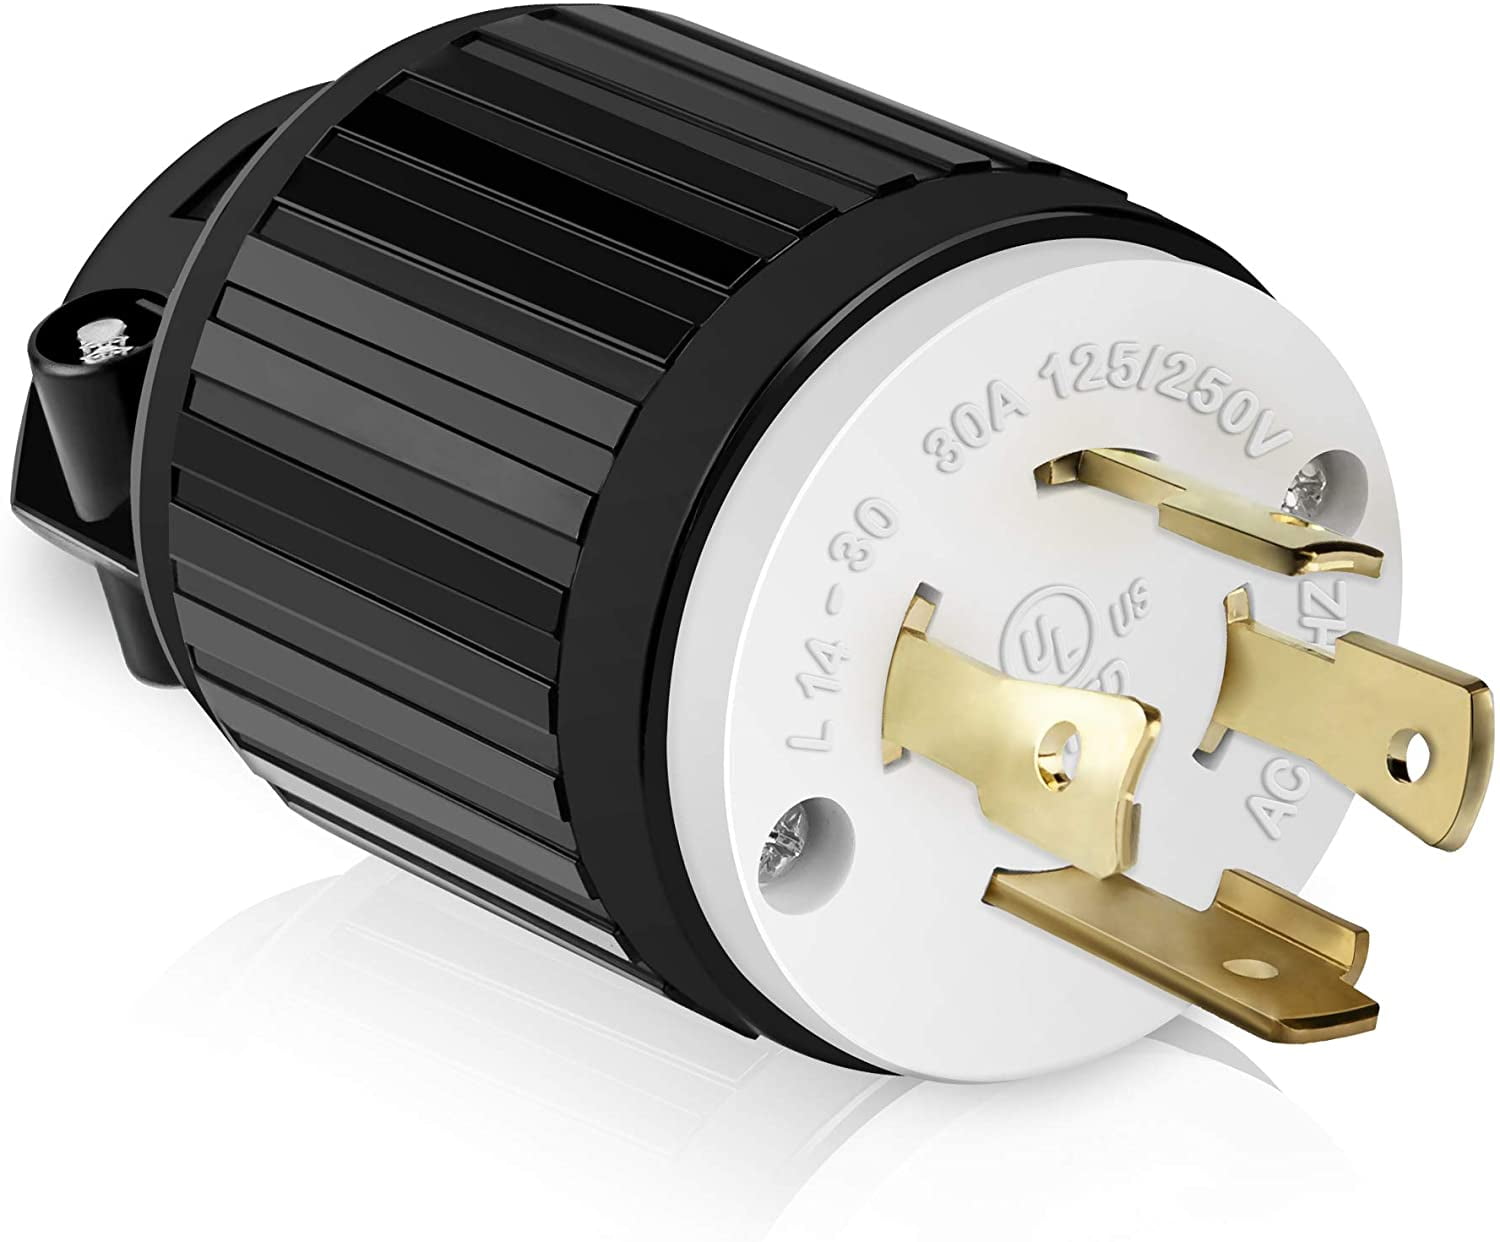 Conntek PL520L1420 Generator Adapter 20-Amp L5-20 Locking Plug to 20-Amp 125/250-Volt L14-20R Female 